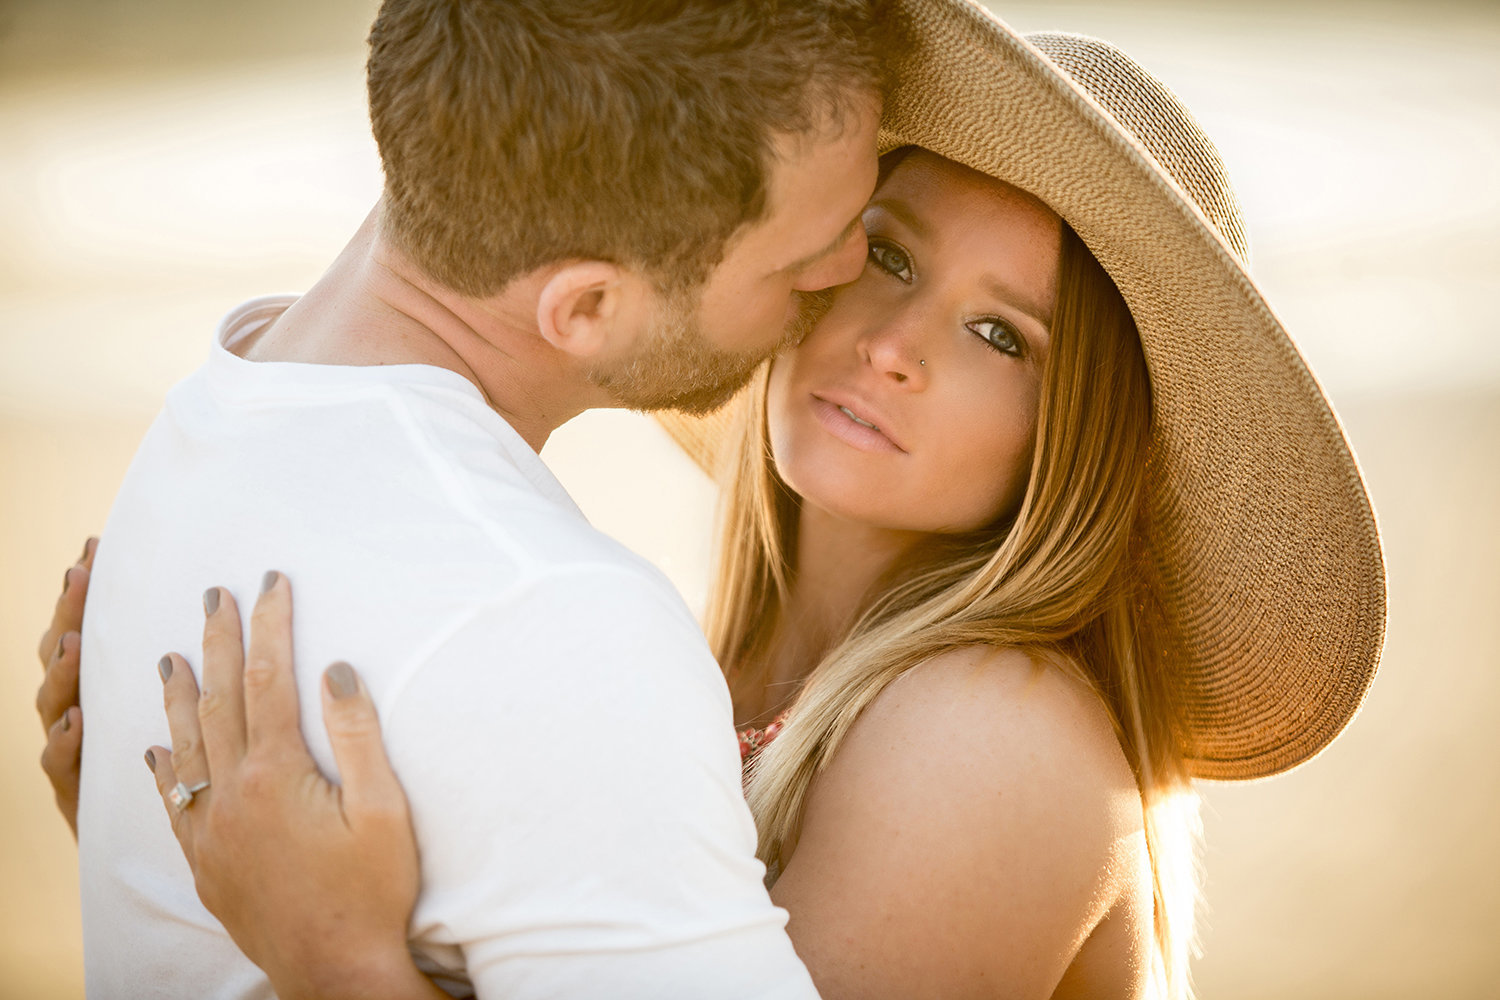 La Jolla Shores engagement photos stunning couple shot